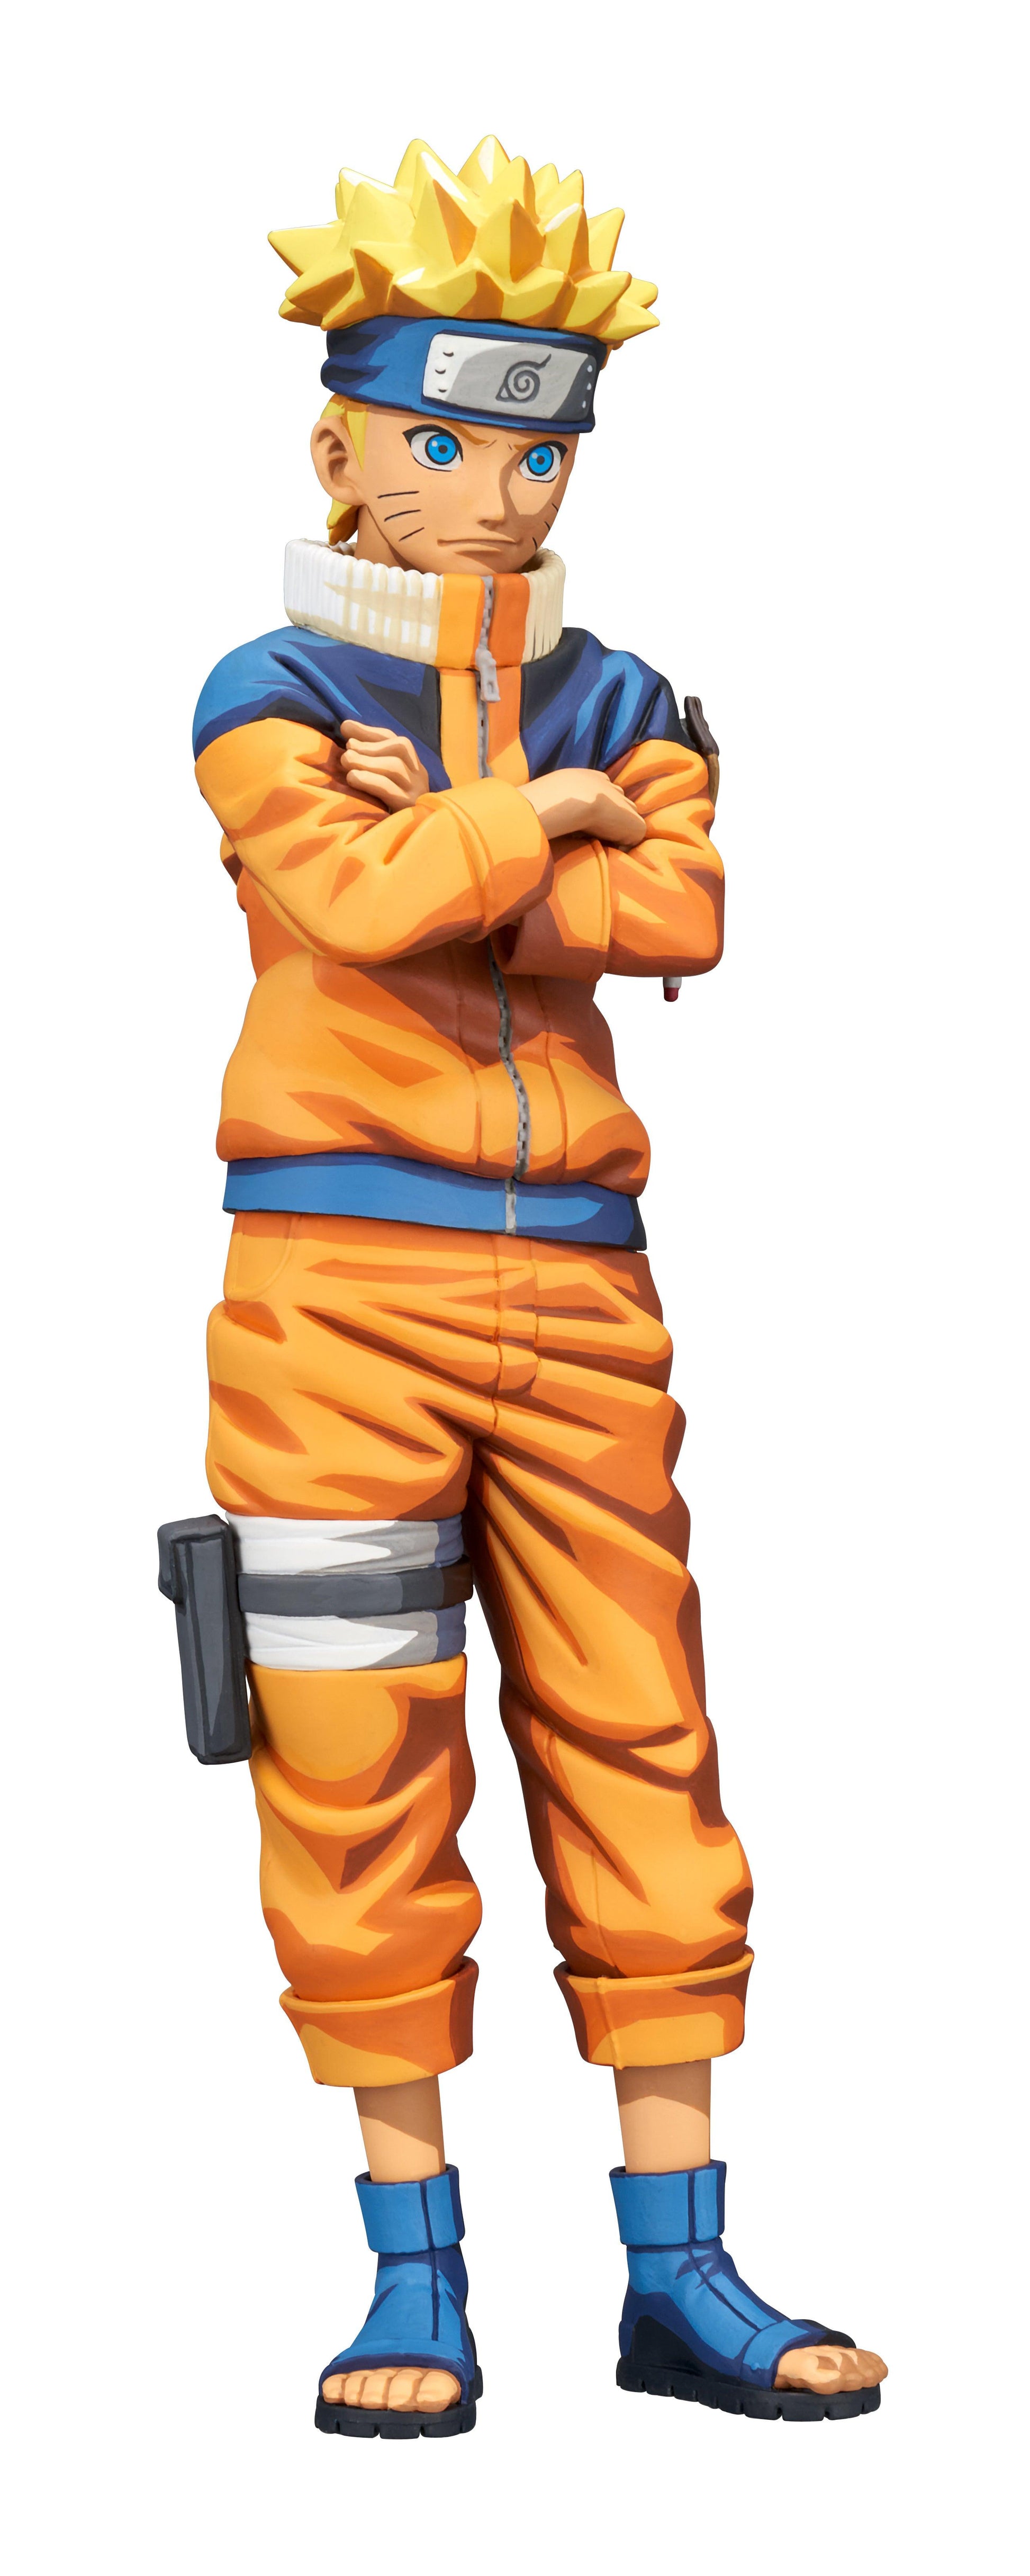 Figurine Grandista Nero Naruto Uzumaki (Manga Dimensions) - Naruto